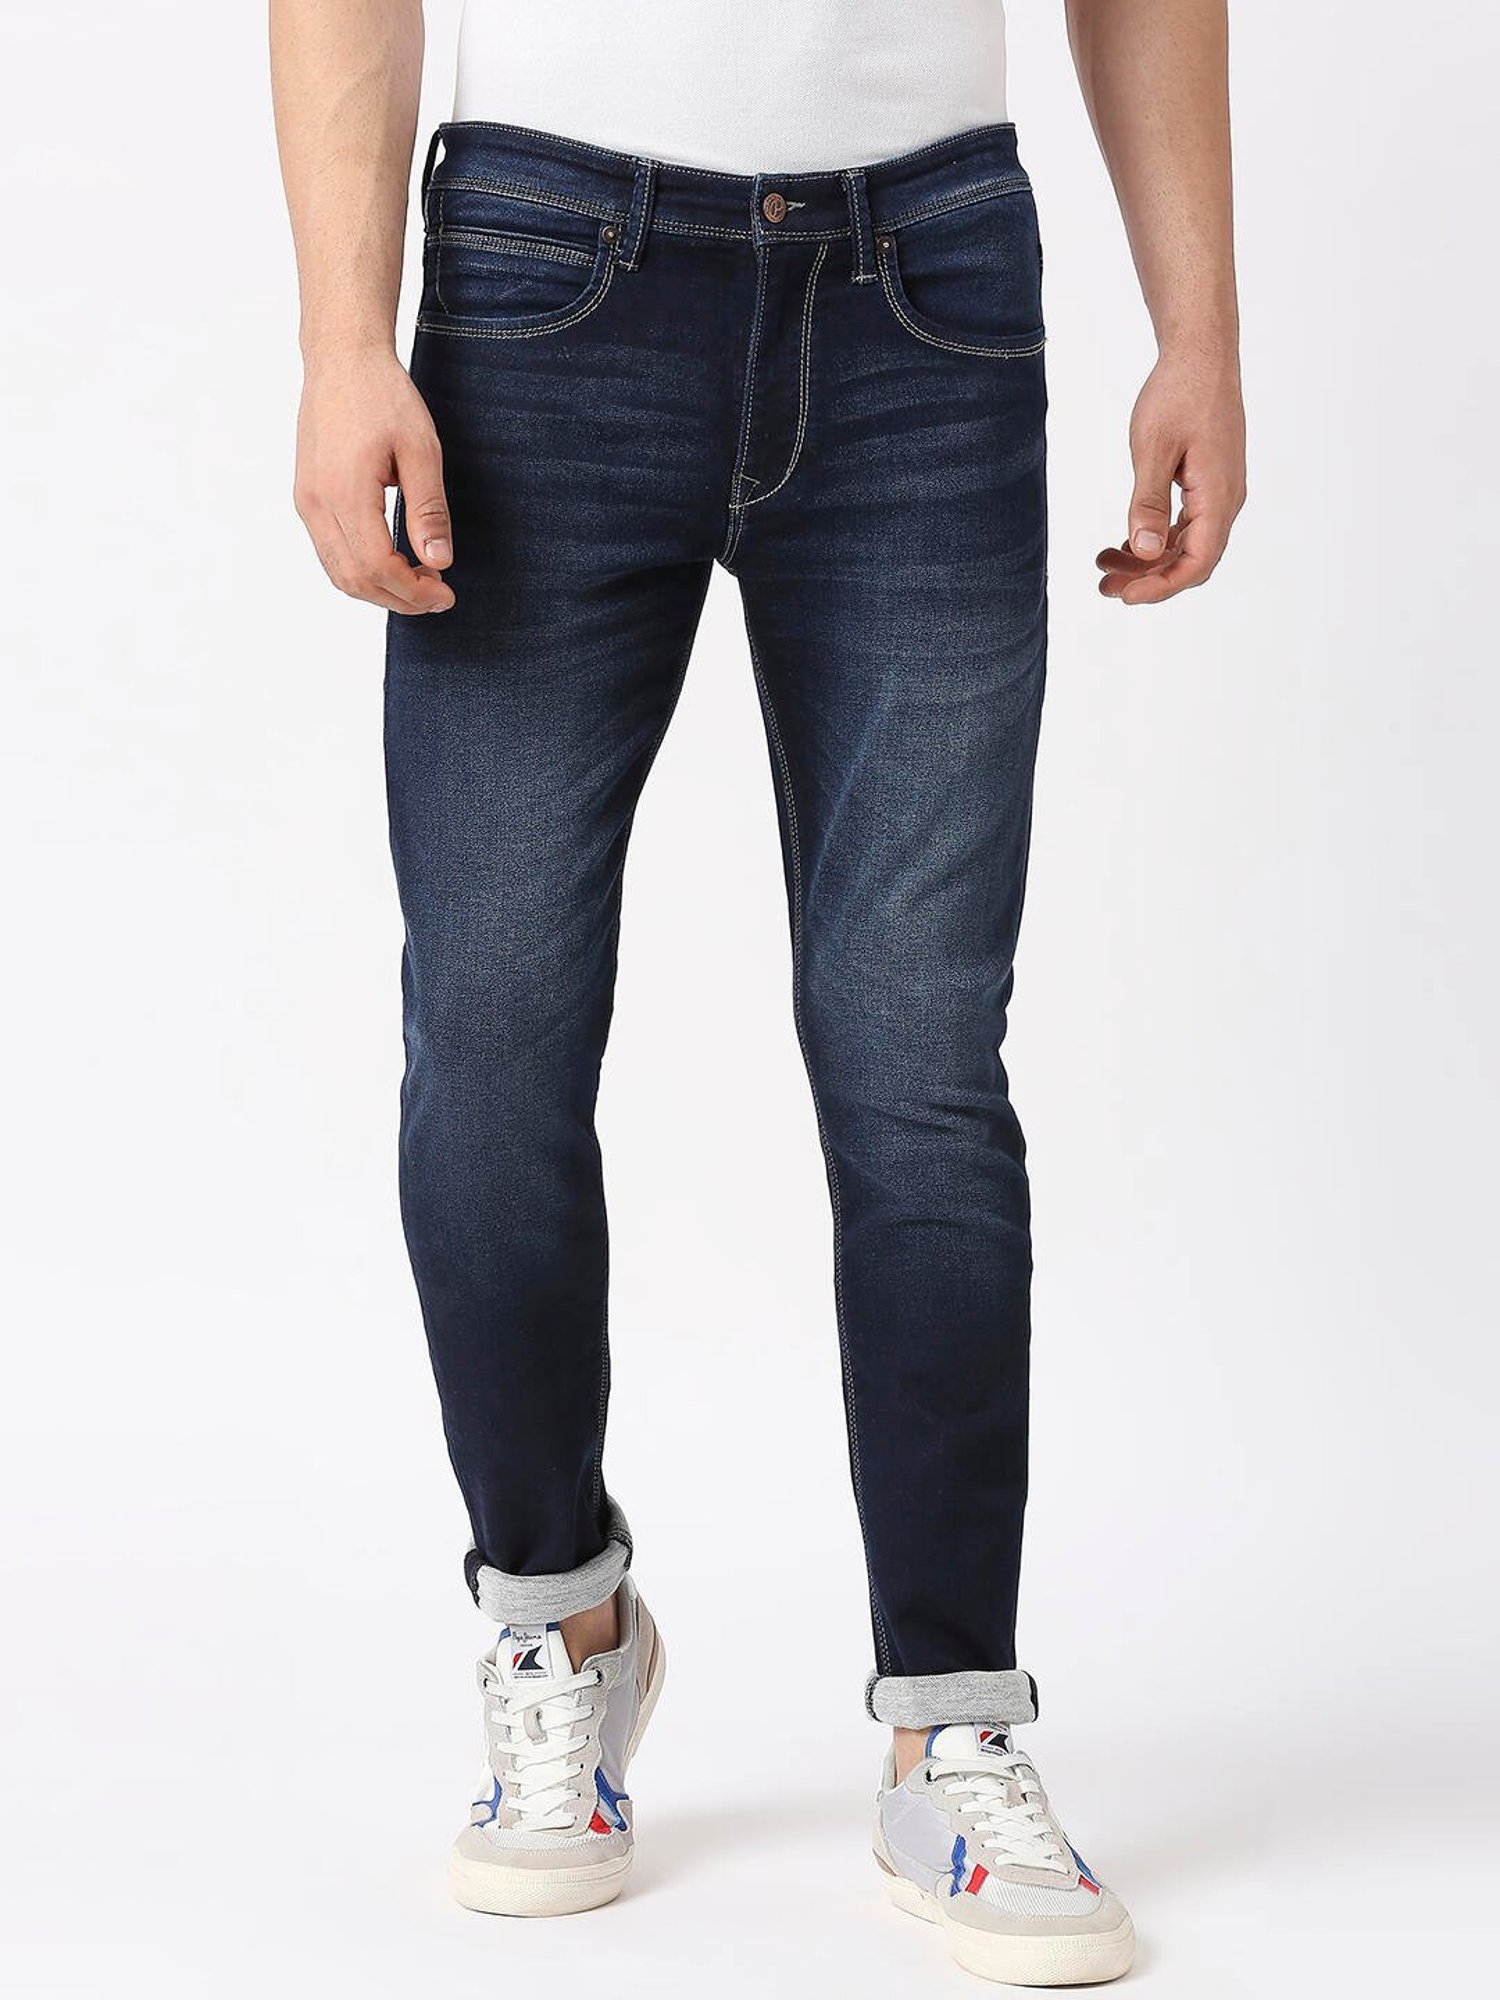 Details 184+ denim jeans skinny fit latest